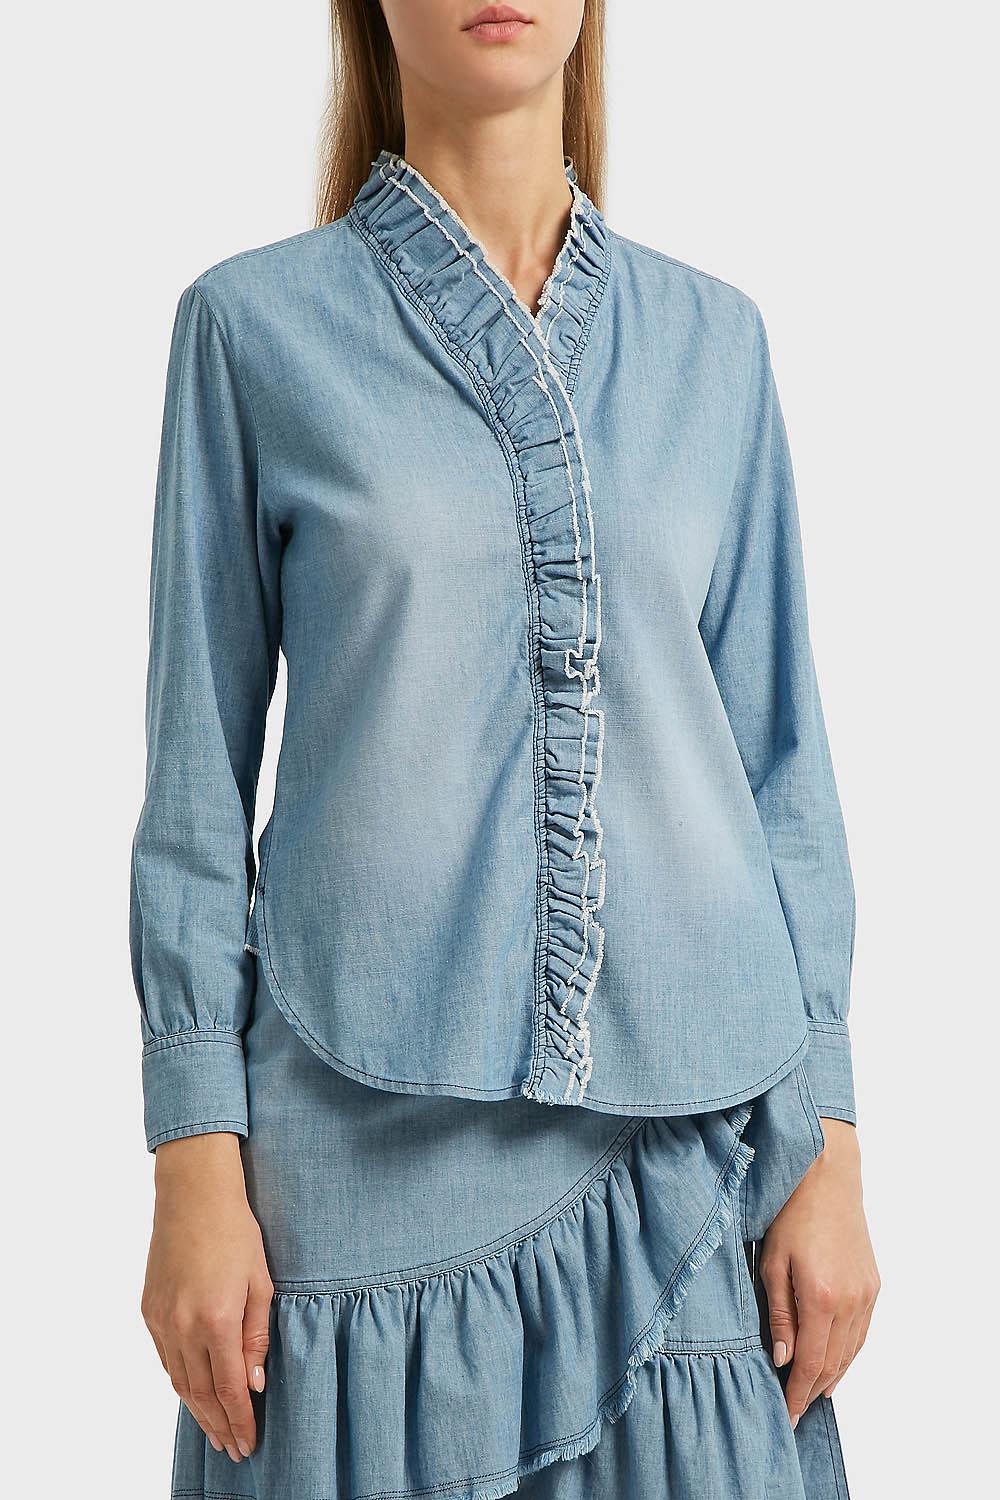 Isabel Cotton Lawendy Chambray Shirt Light Denim (Blue) - Lyst